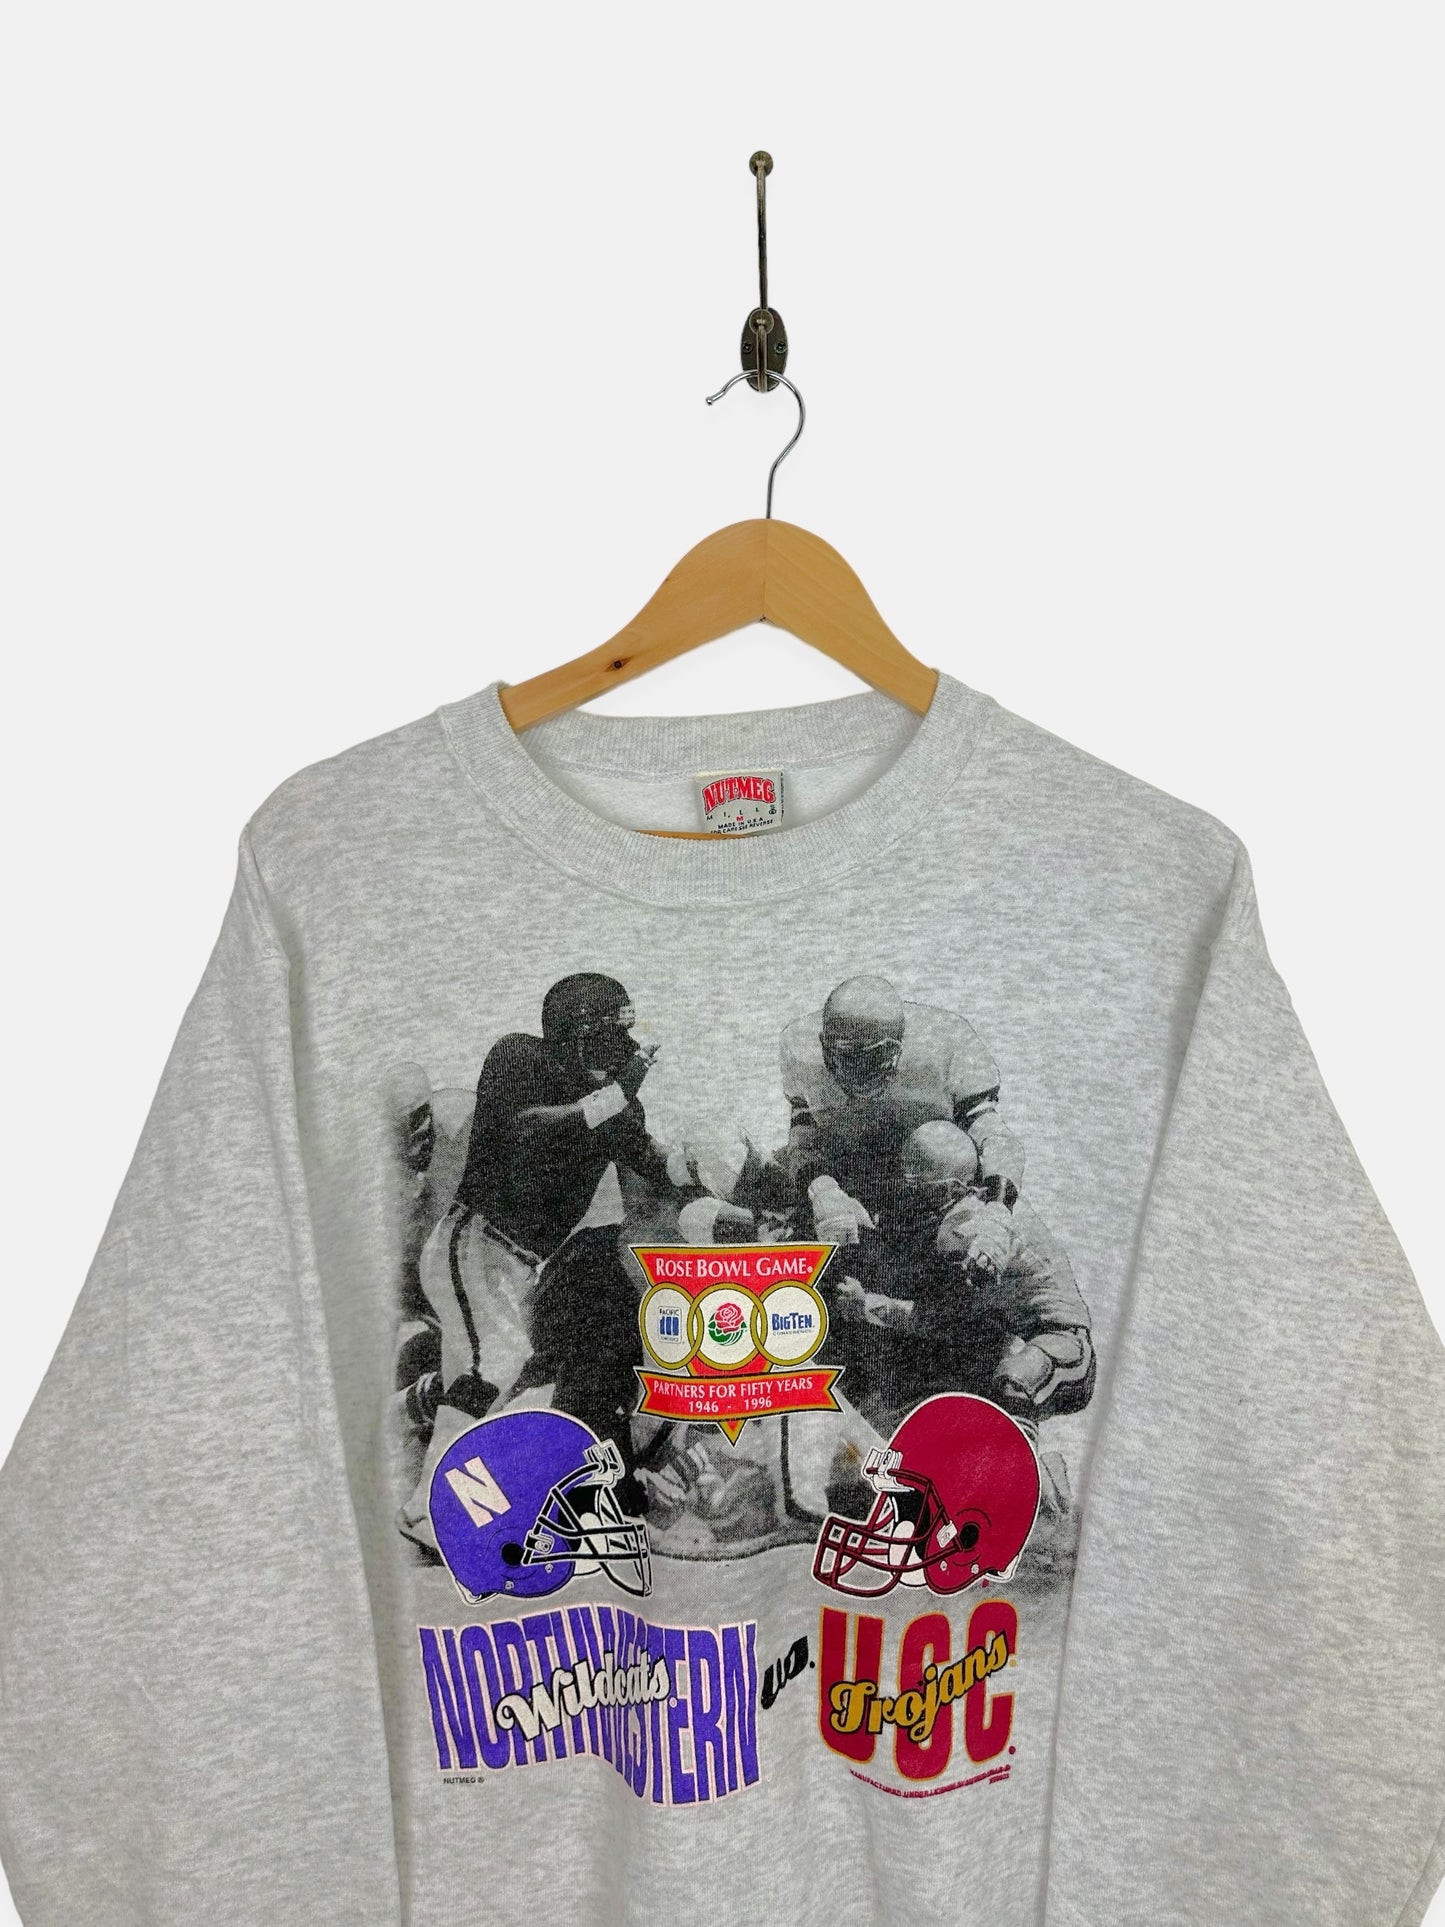 1996 Wildcats vs Trojans USA Made Vintage Sweatshirt Size 10-12